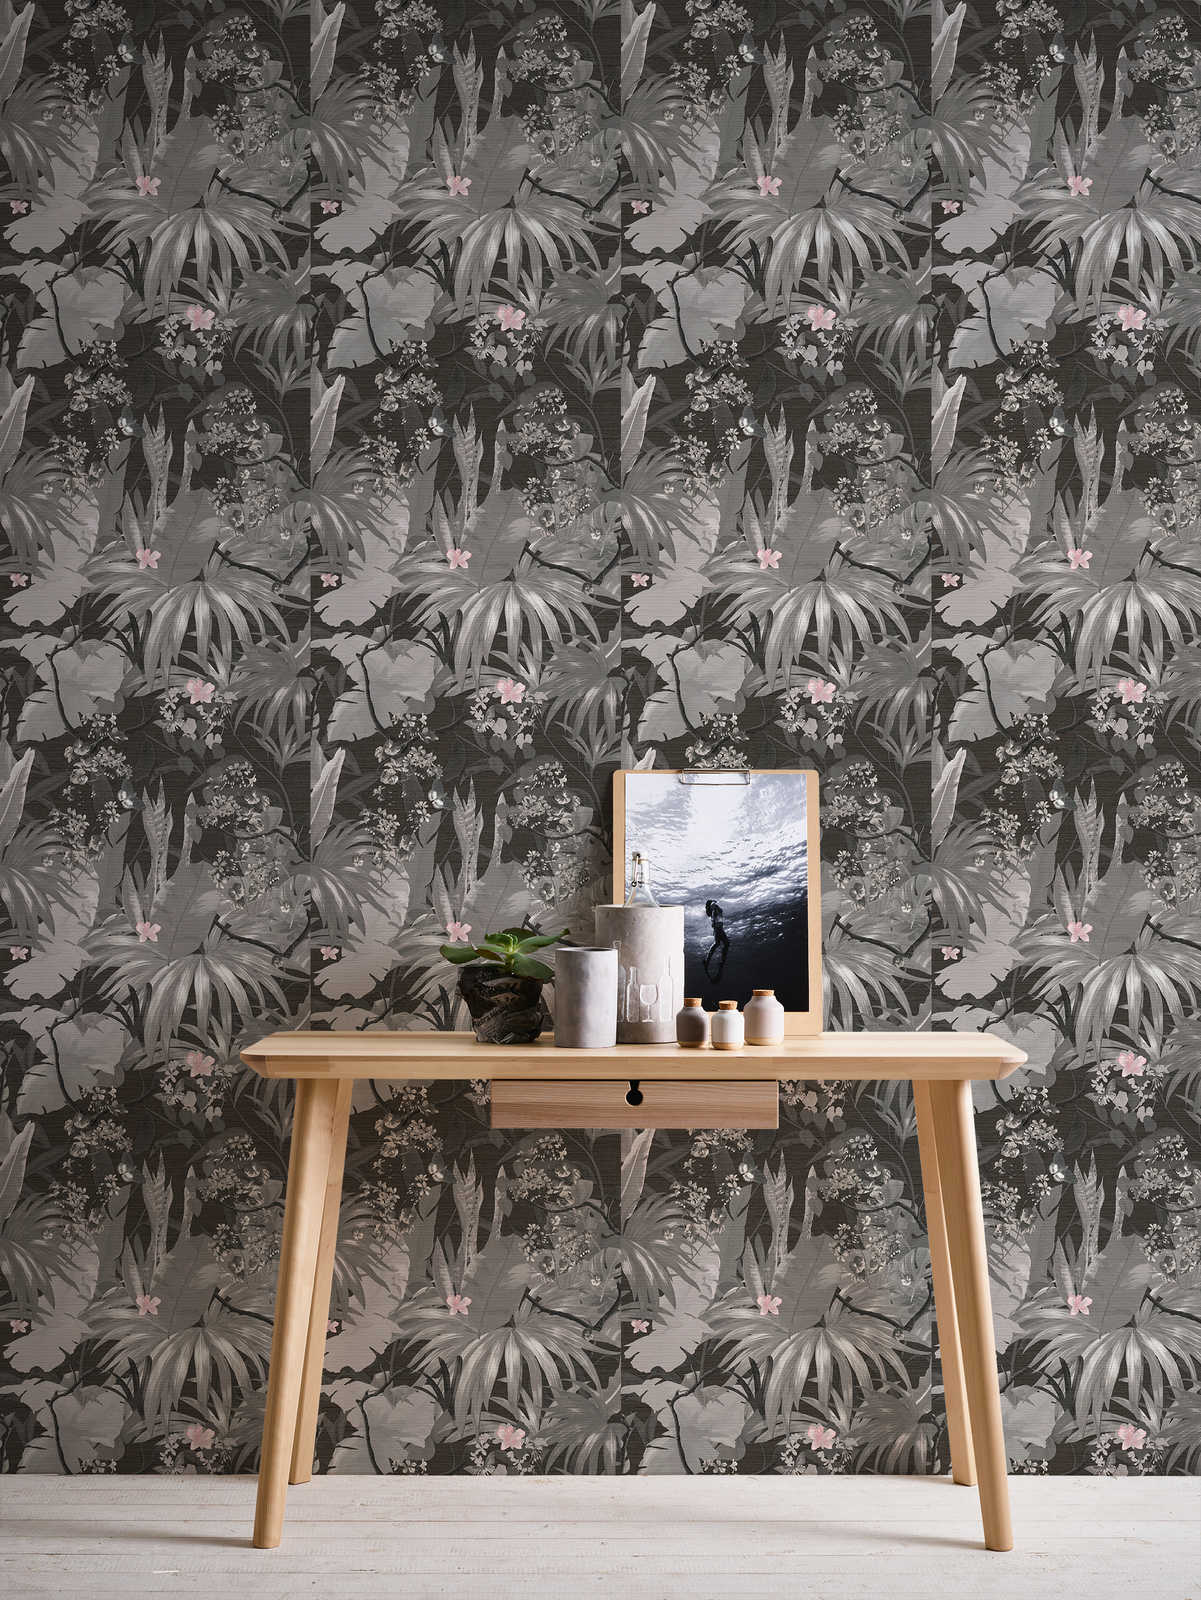             Dschungeloptik Tapete mit Natur Design – Grau, Rosa
        